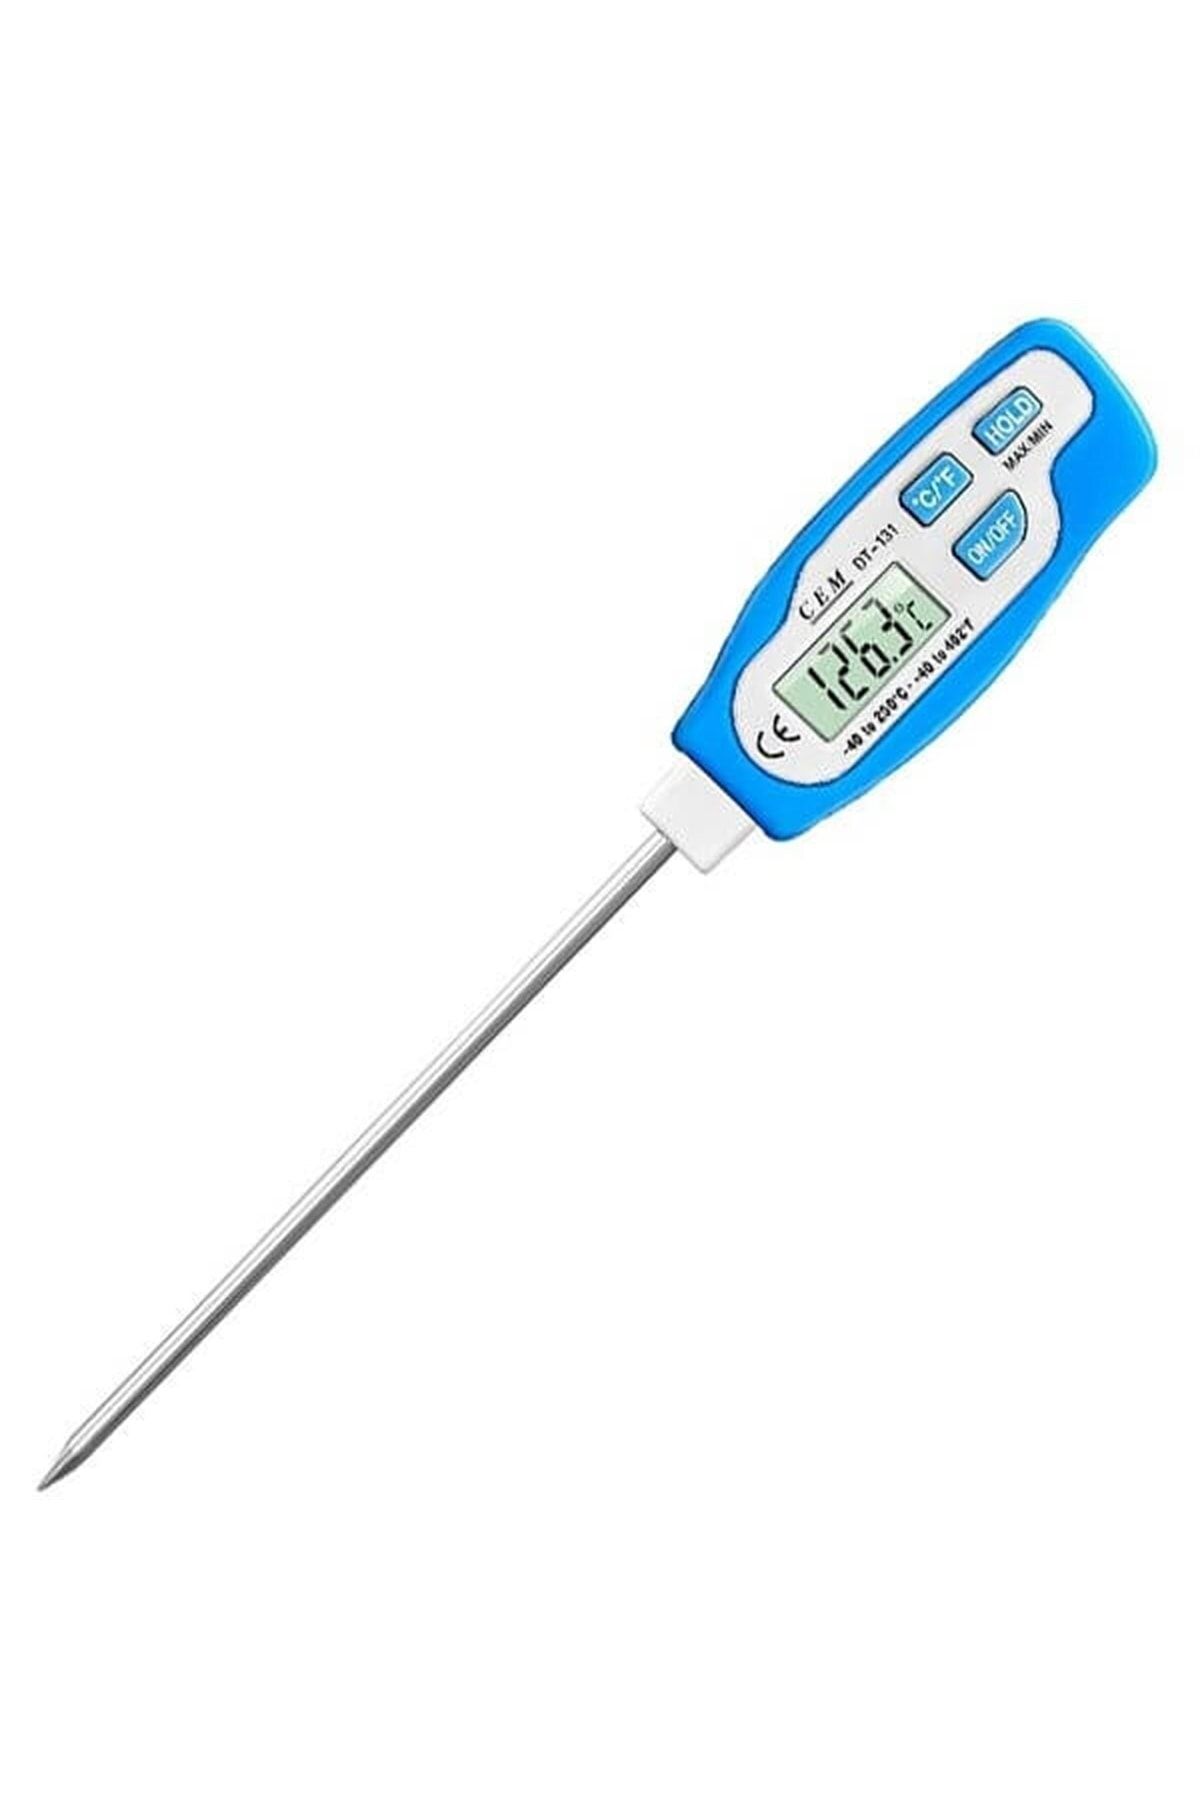 Cem Dt-131 Saplama Problu Gıda Termometresi